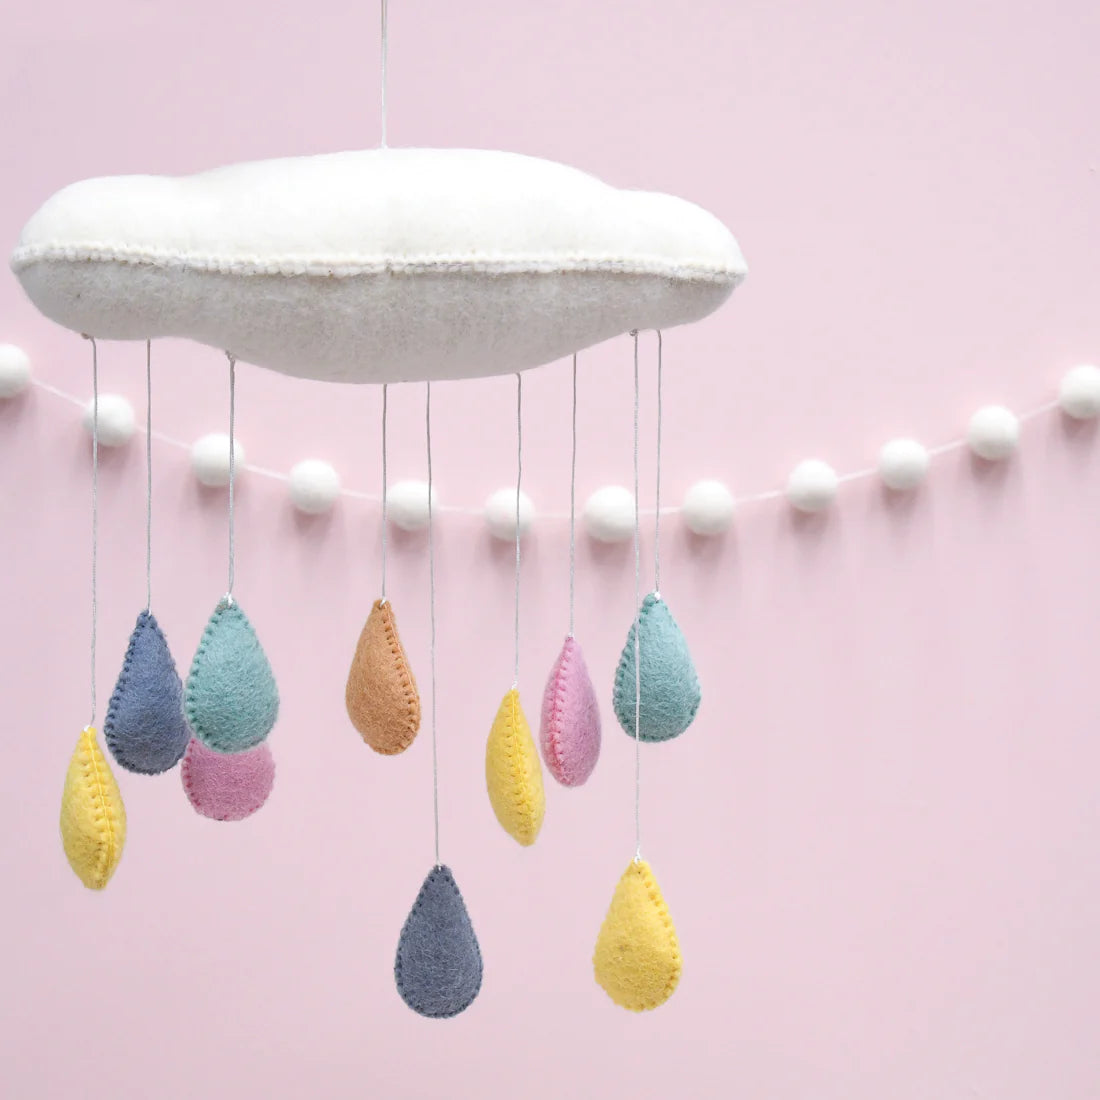 Tara Treasures Cloud Nursery Mobile with Raindrops - 3D Pastel